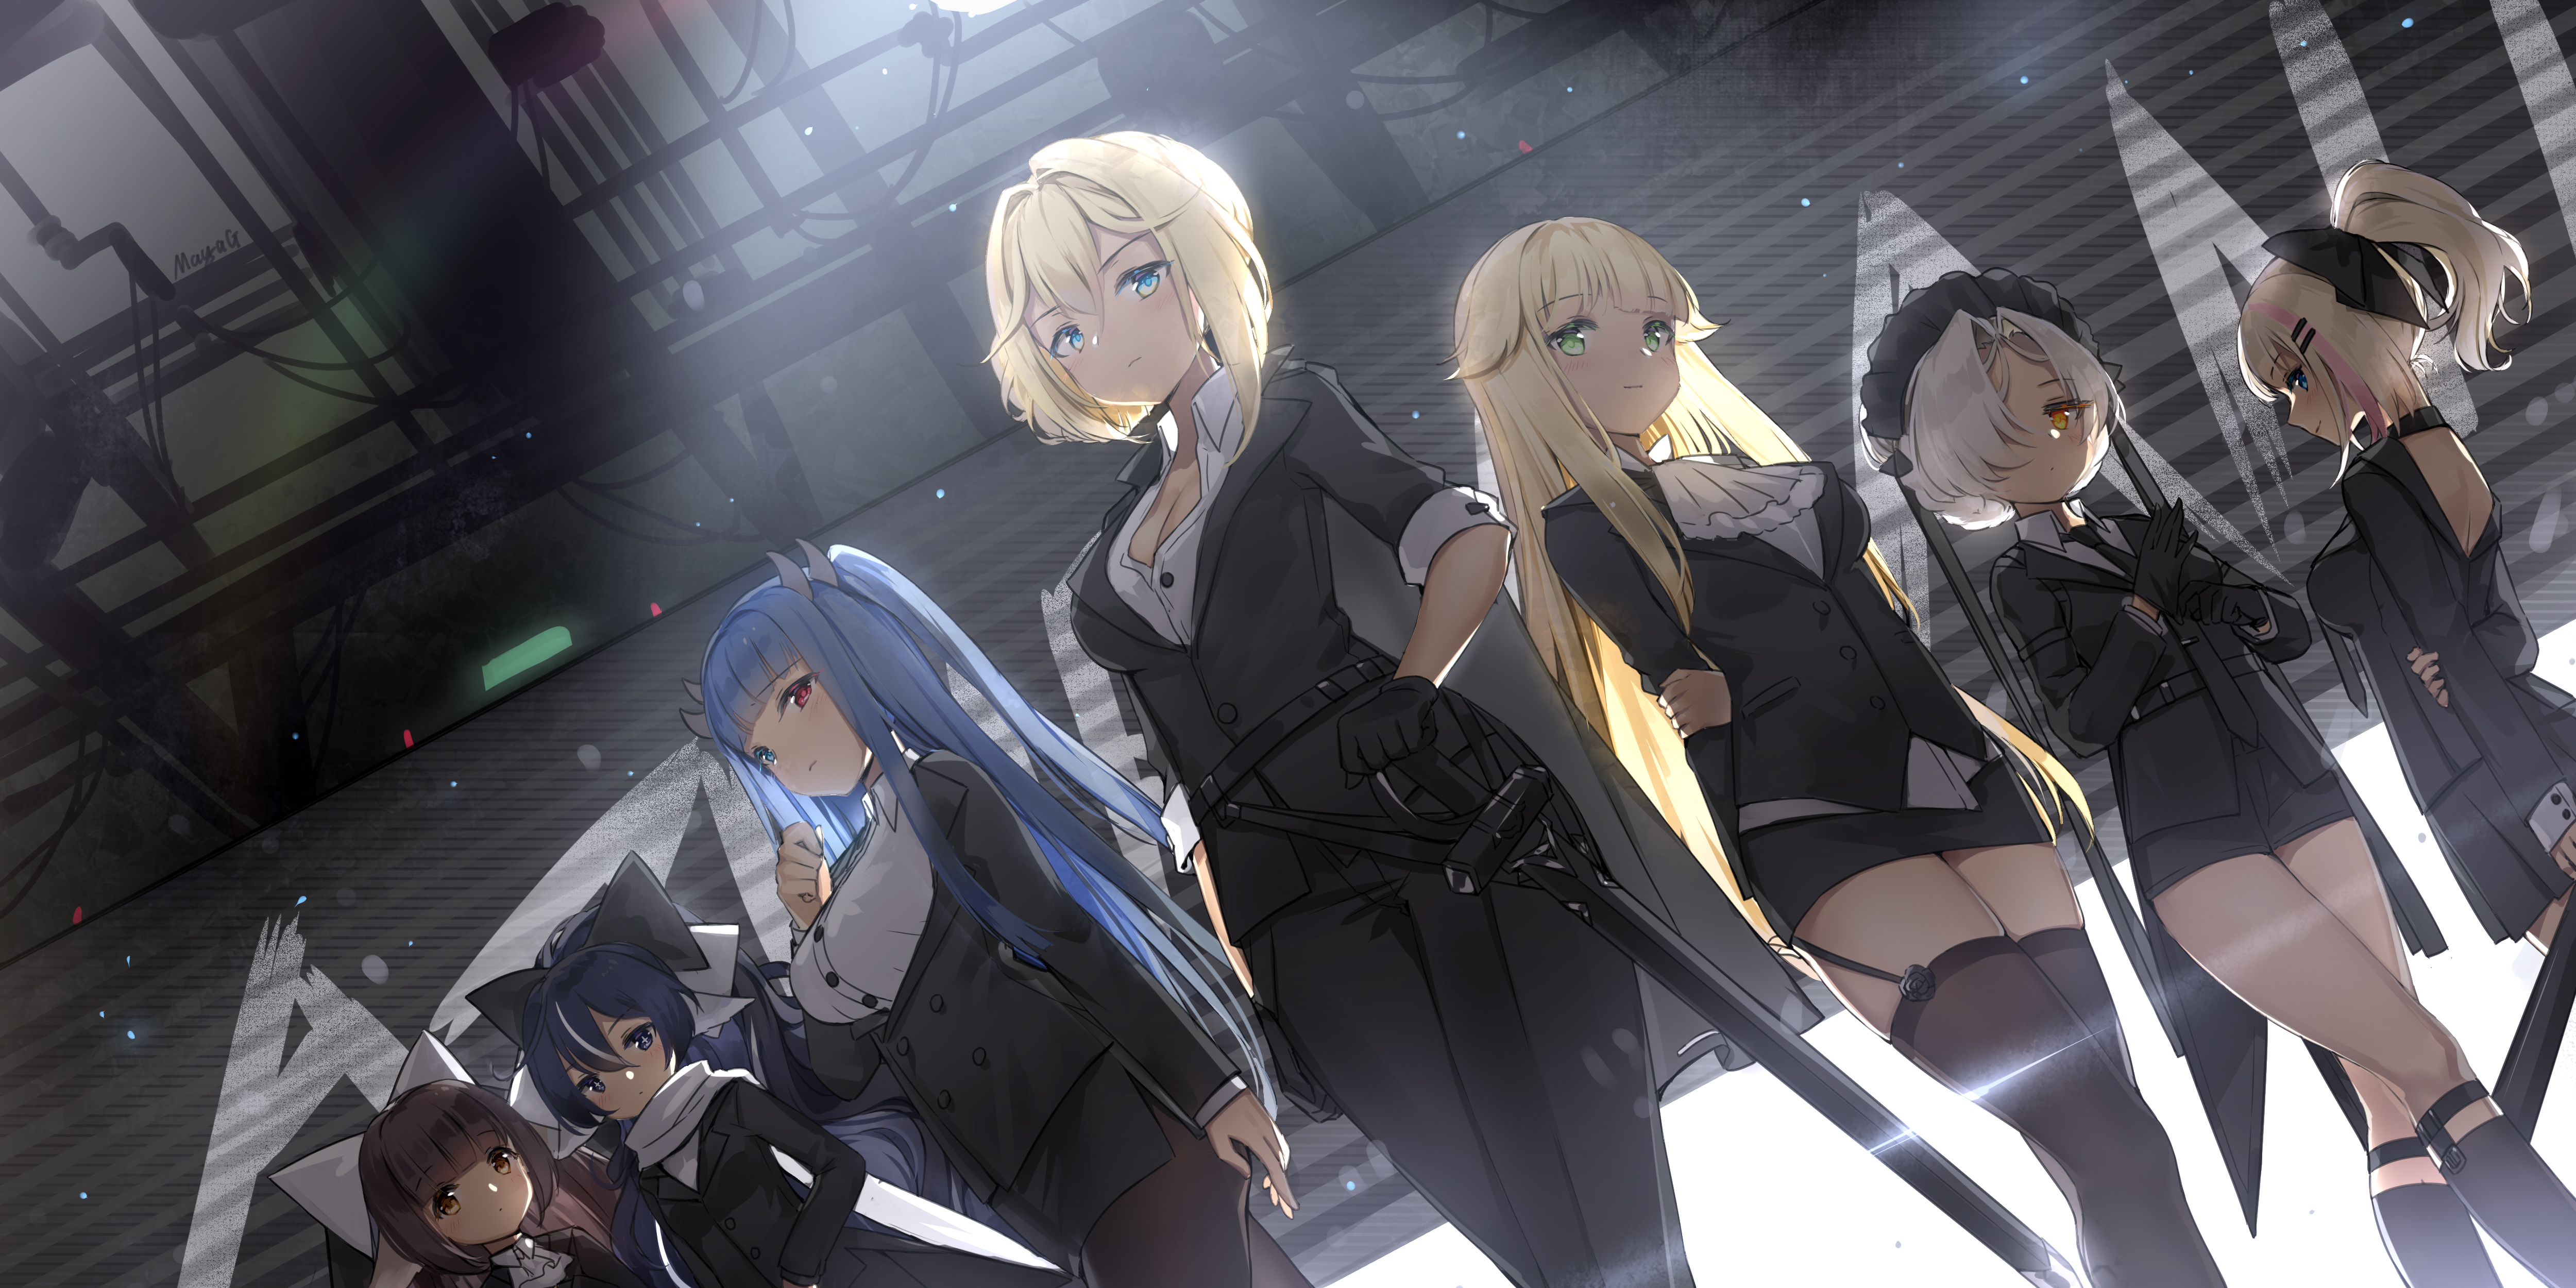 the five sword girls anime